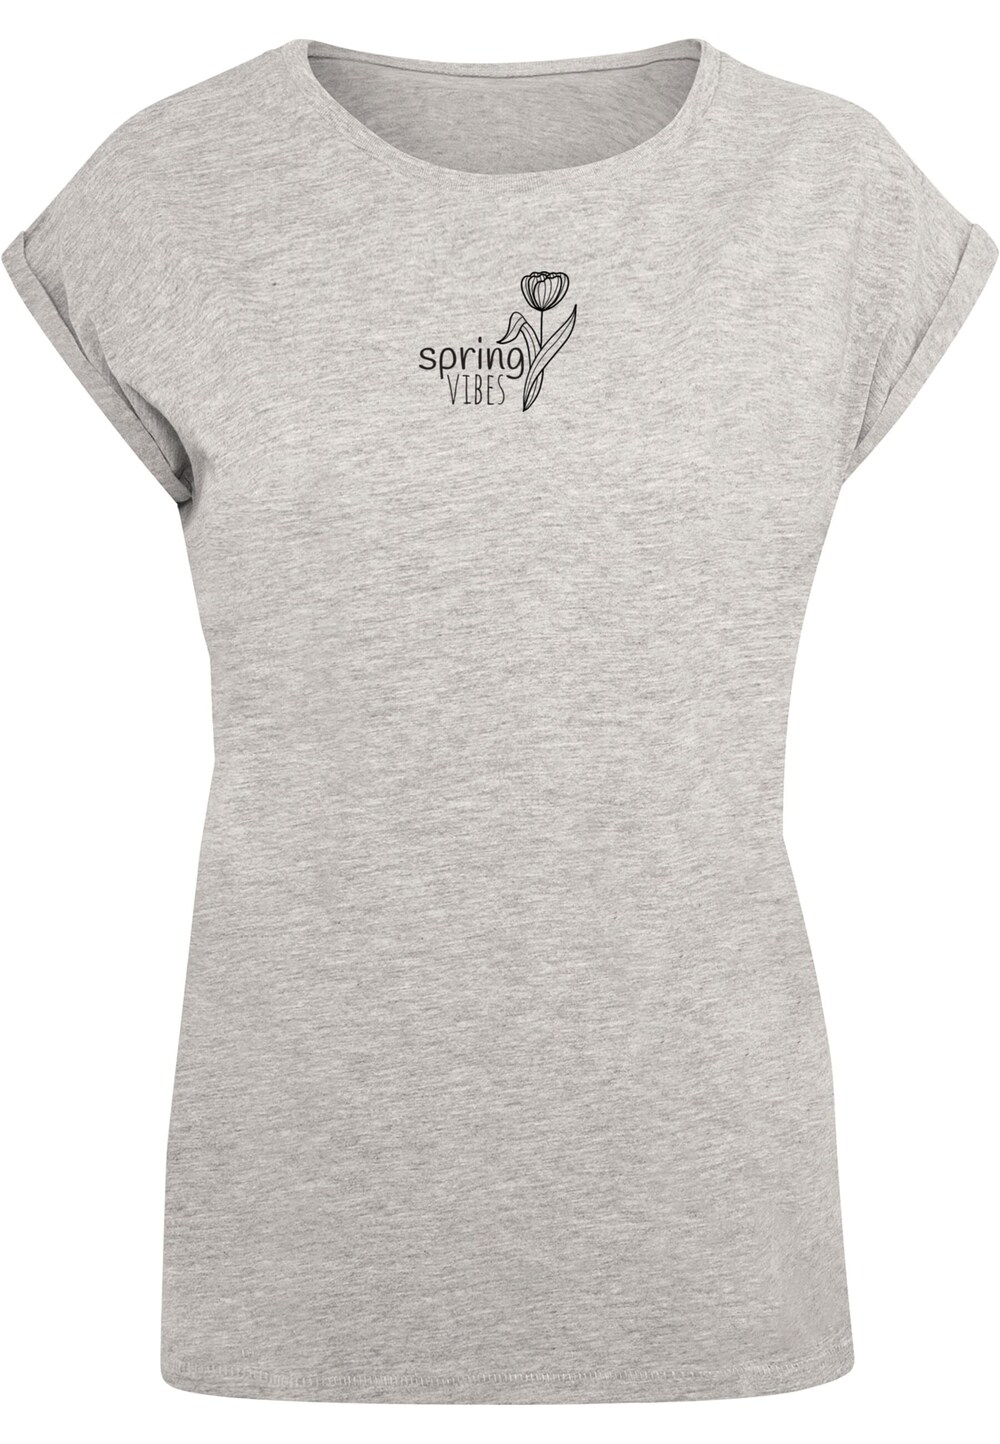 Рубашка Merchcode Spring - Vibes, пестрый серый